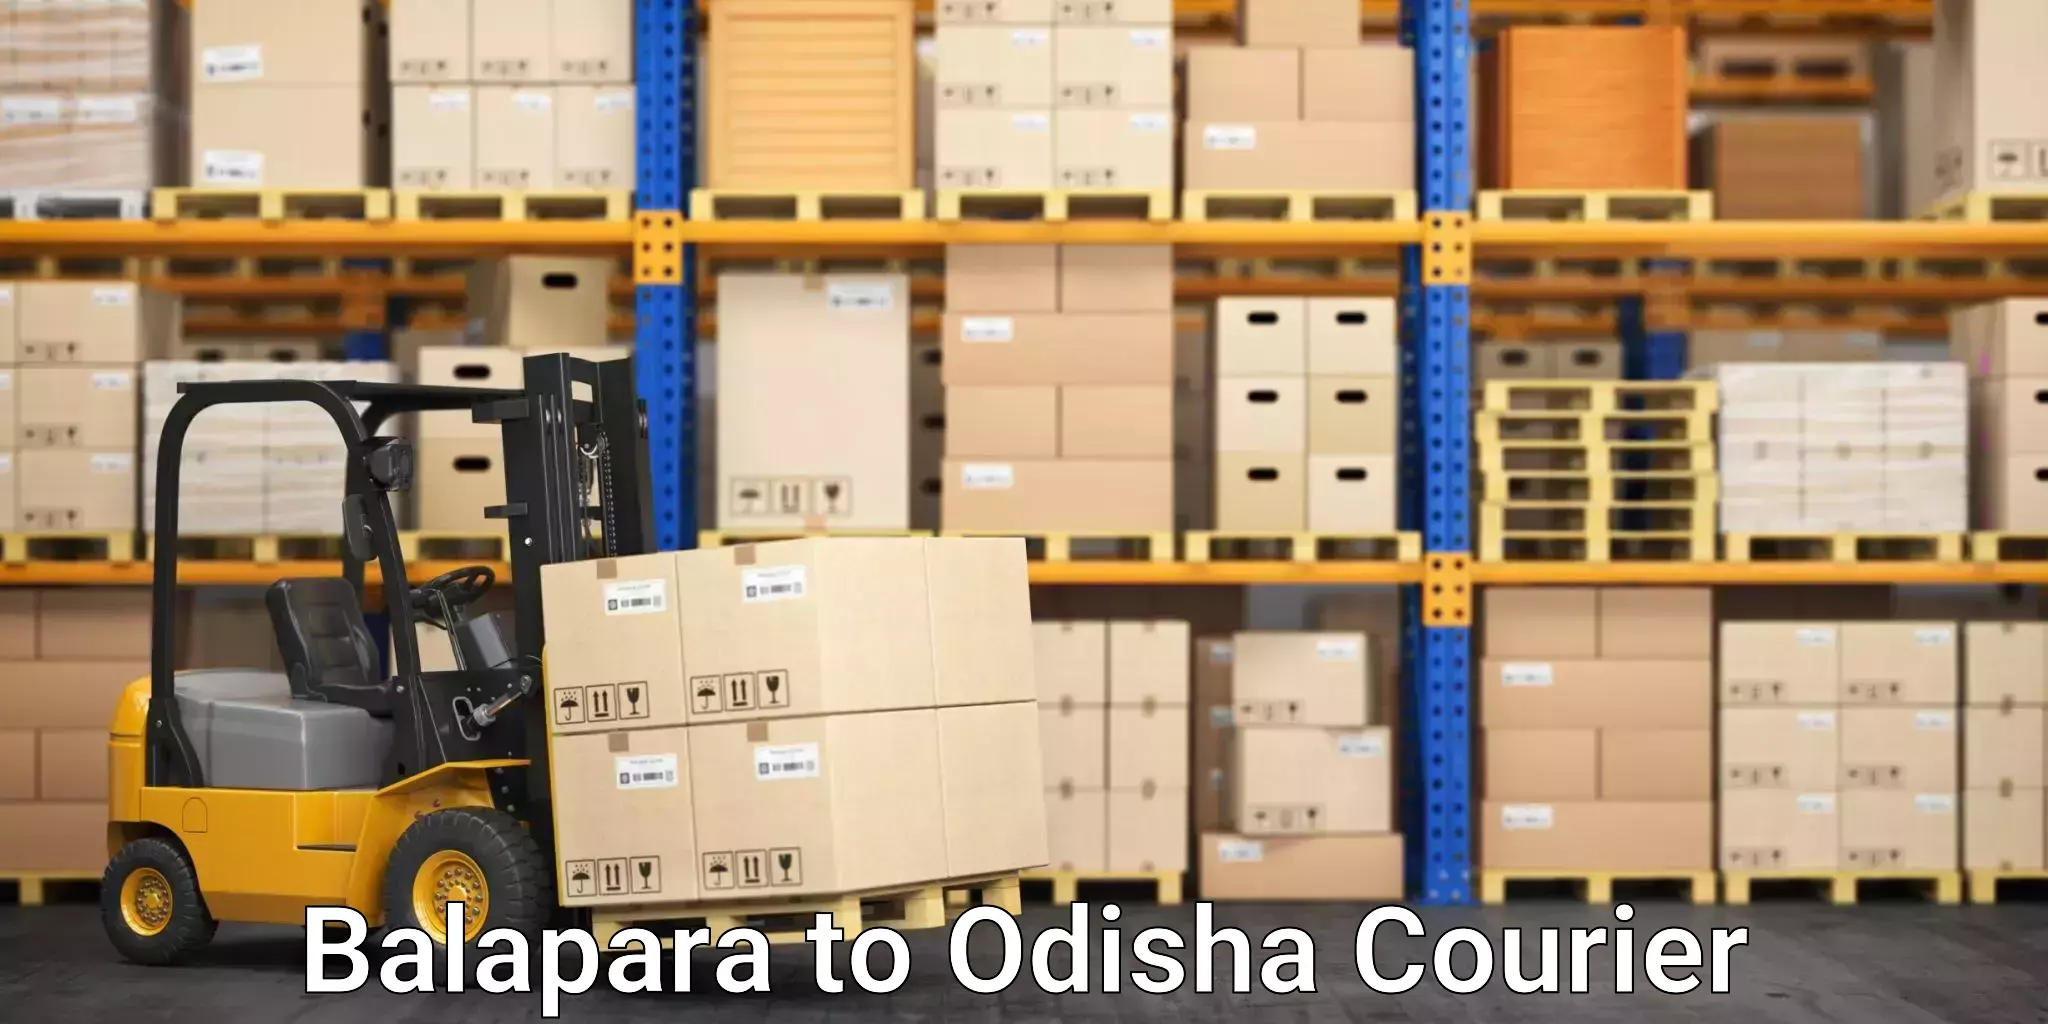 Modern courier technology Balapara to Asika